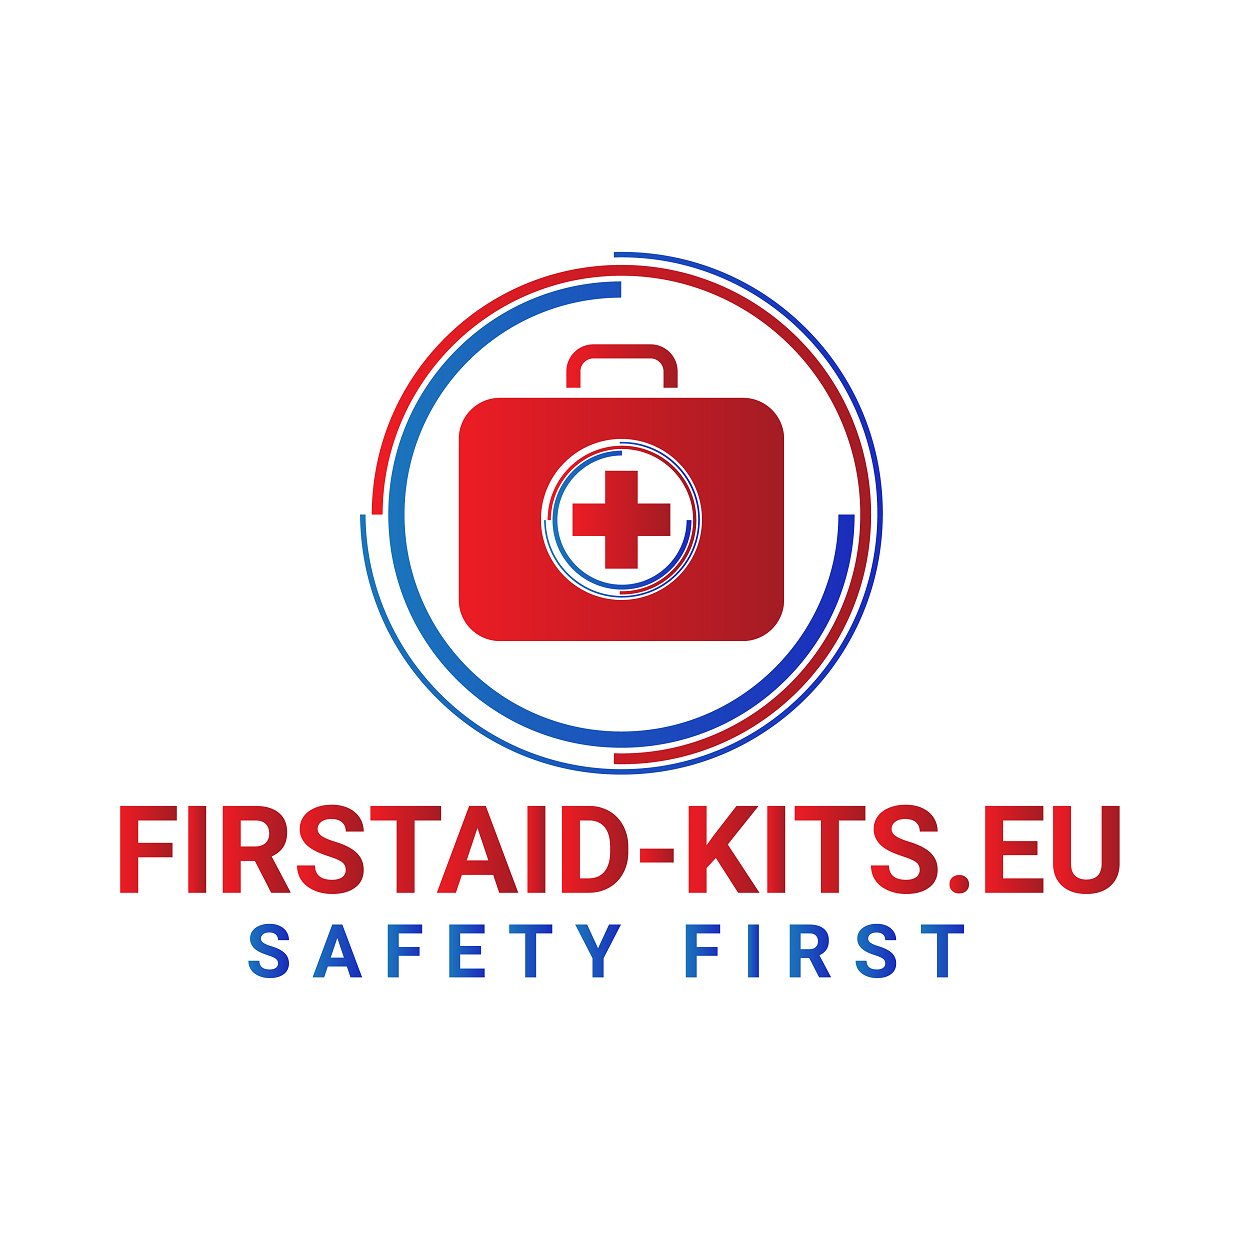 Firstaid-kits.eu